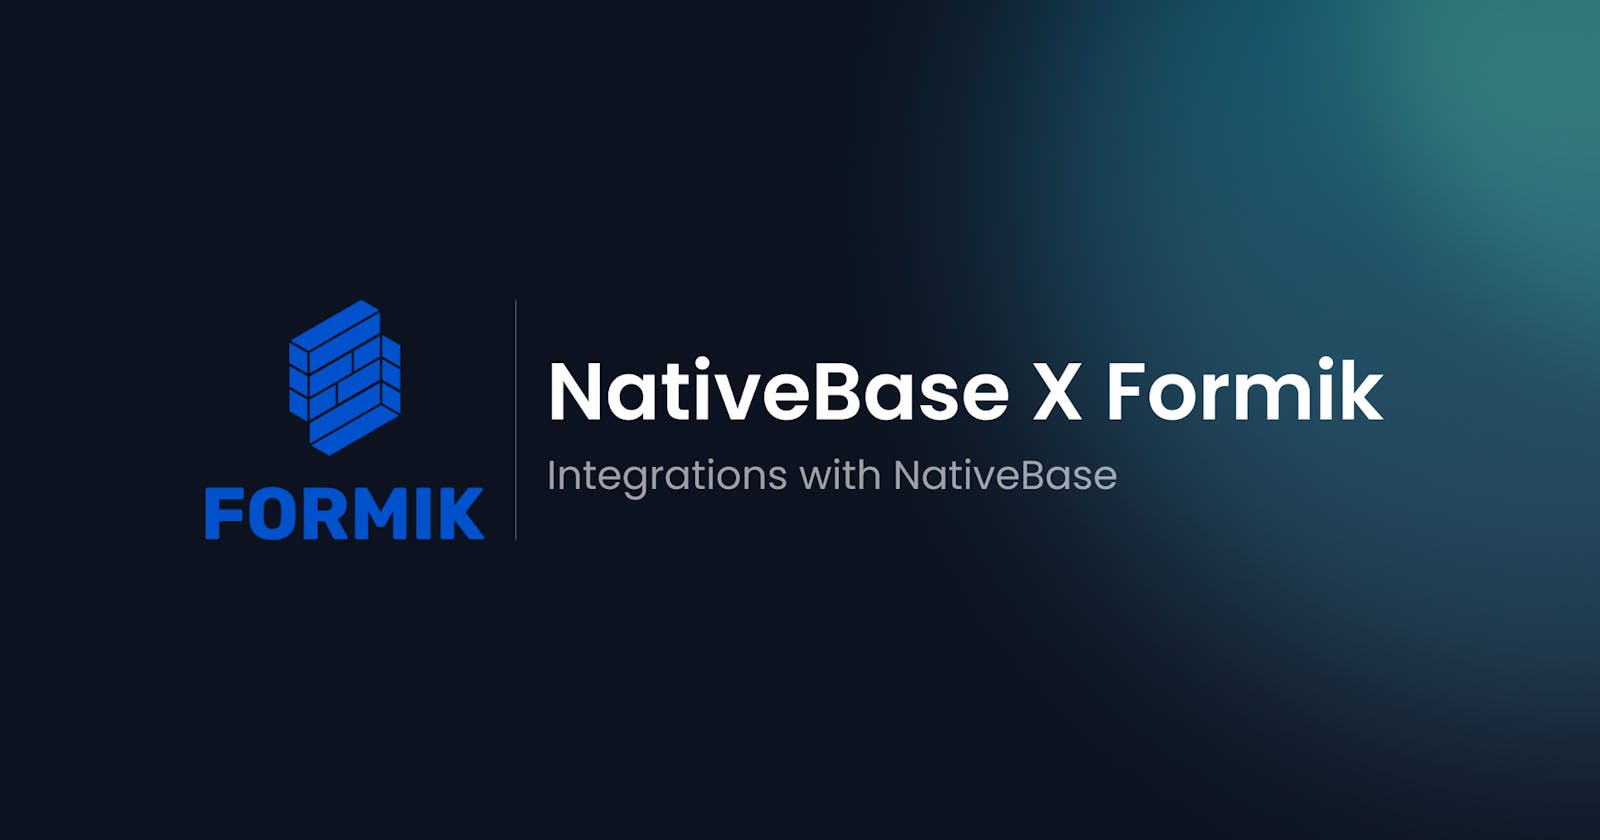 NativeBase X Formik